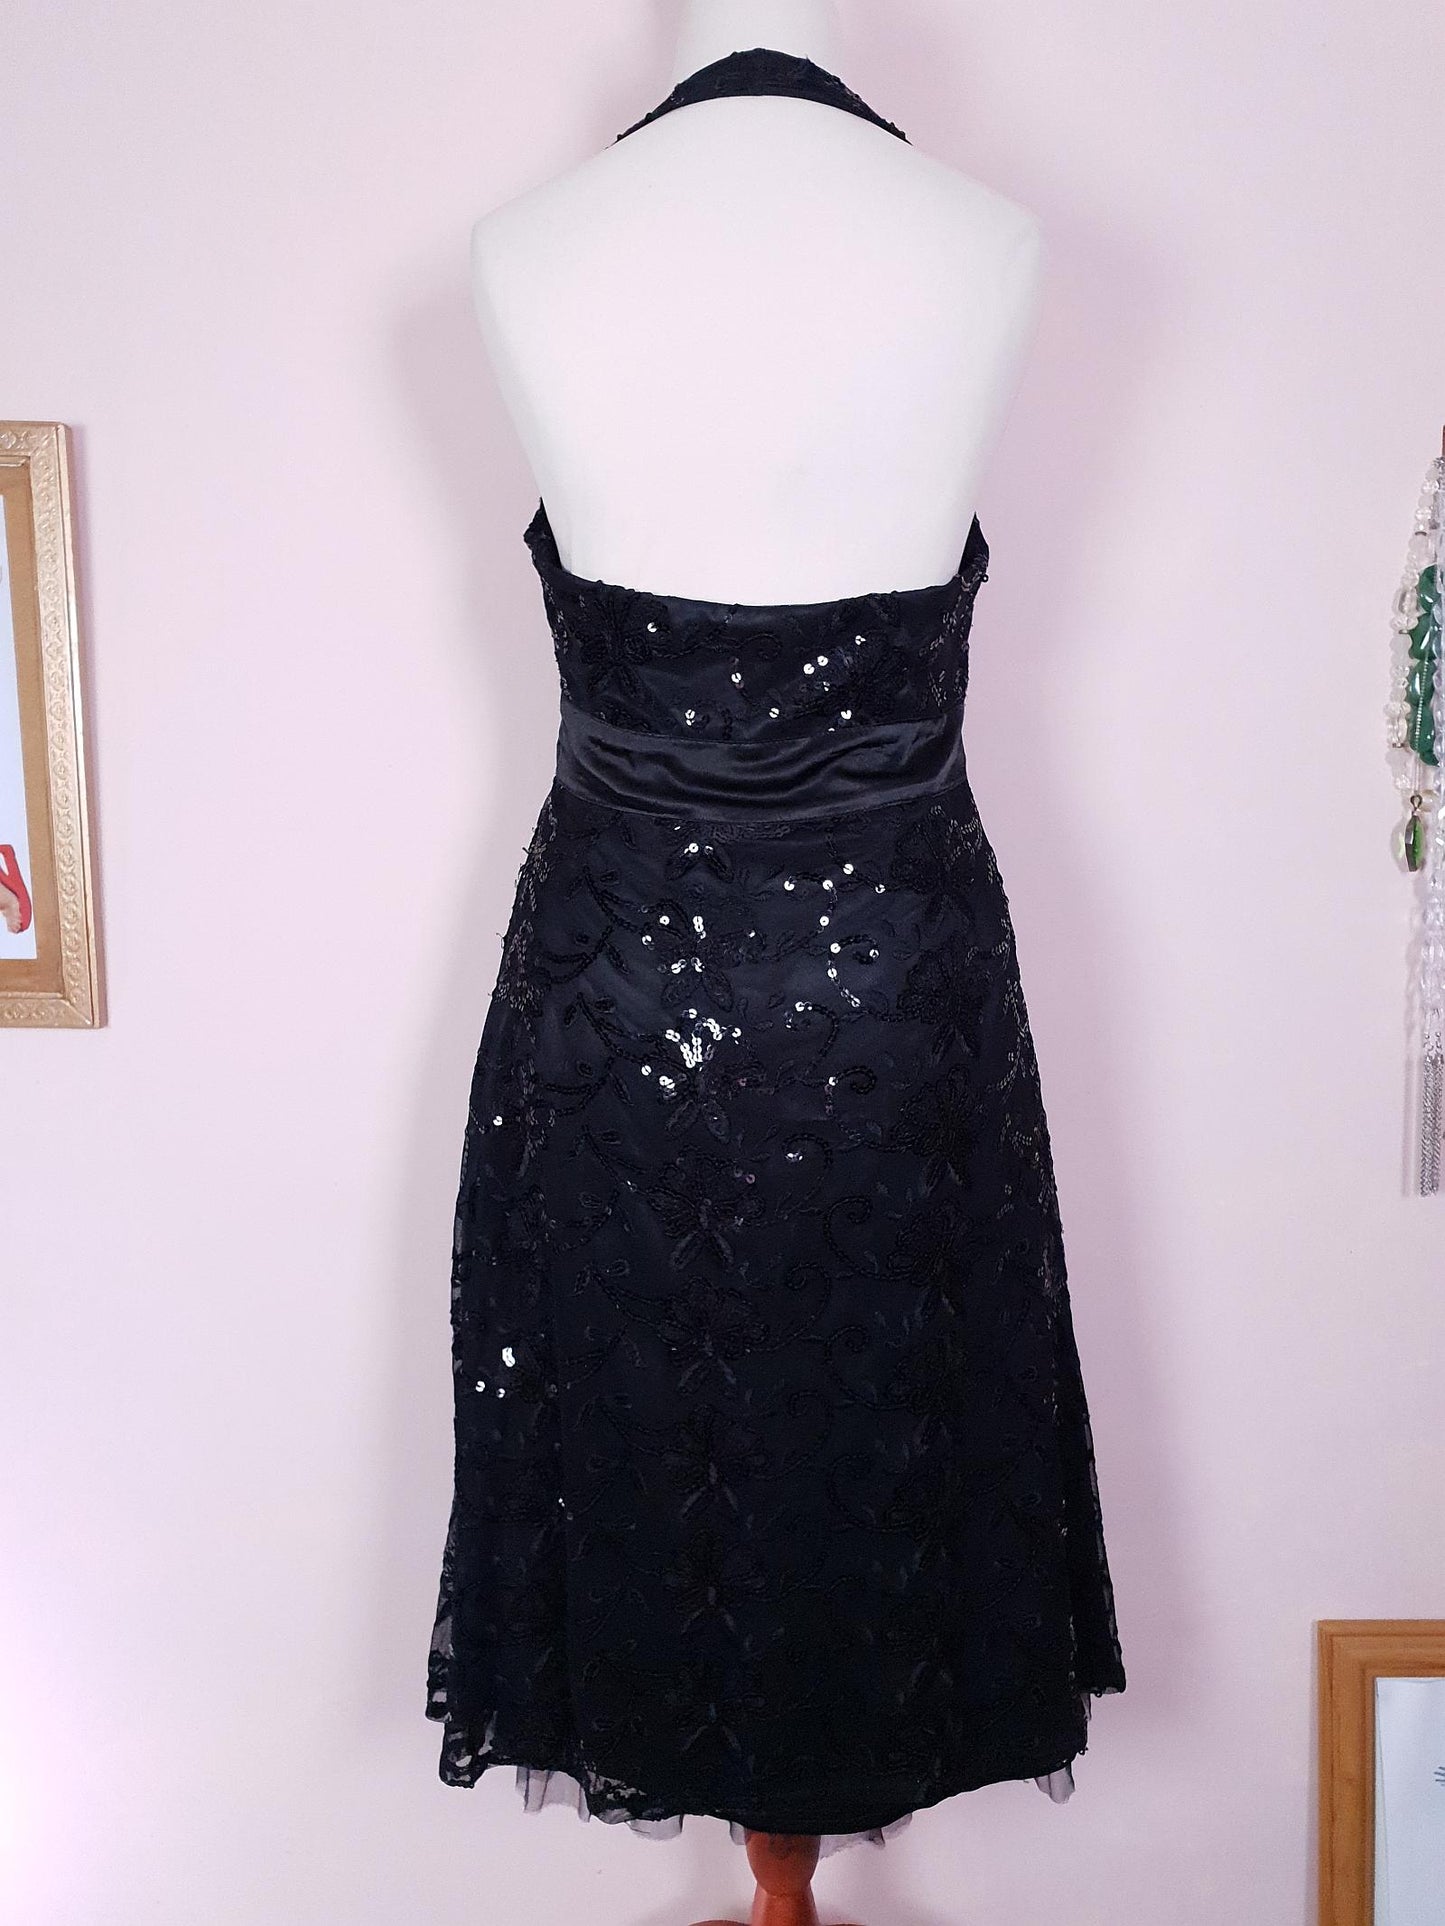 Vintage Black Sequin Party Dress 1990s Halter Neck LBD Size 10 Fit & Flare Midi